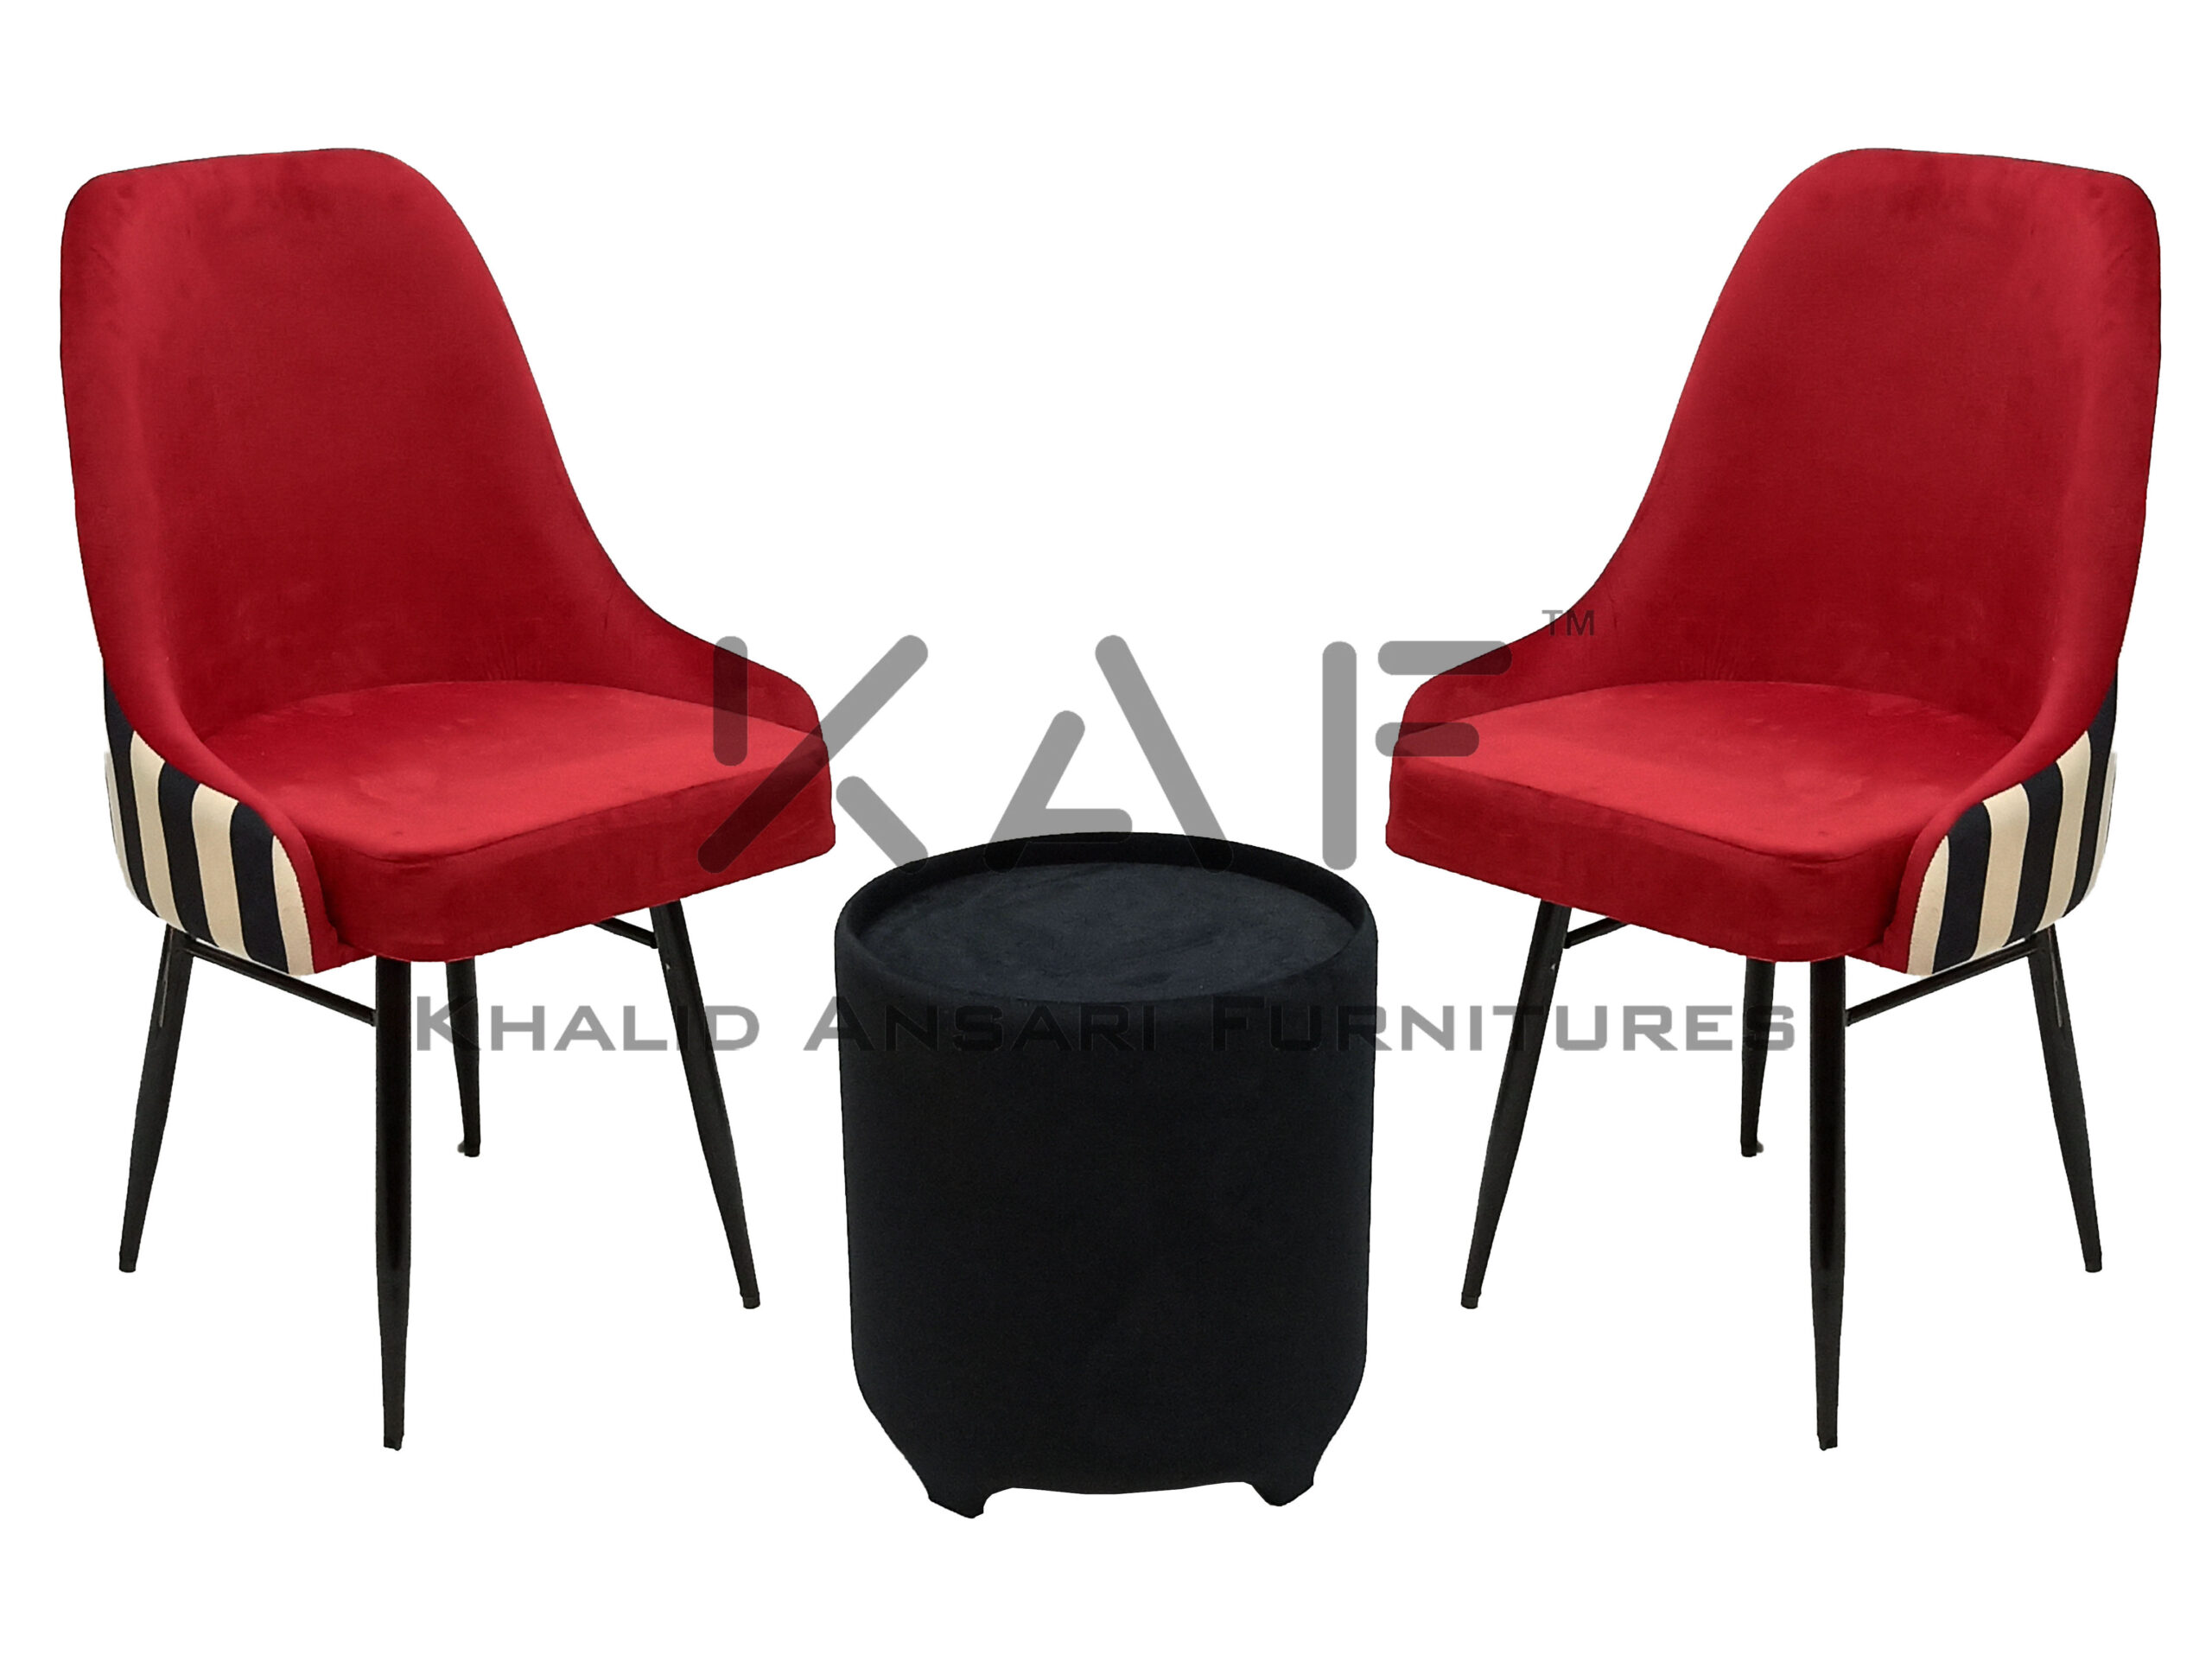 Bed Room Premium Chair High Back Arm Red Velvet set with Black Velvet Tea Table - 2 Chairs + 1 Table